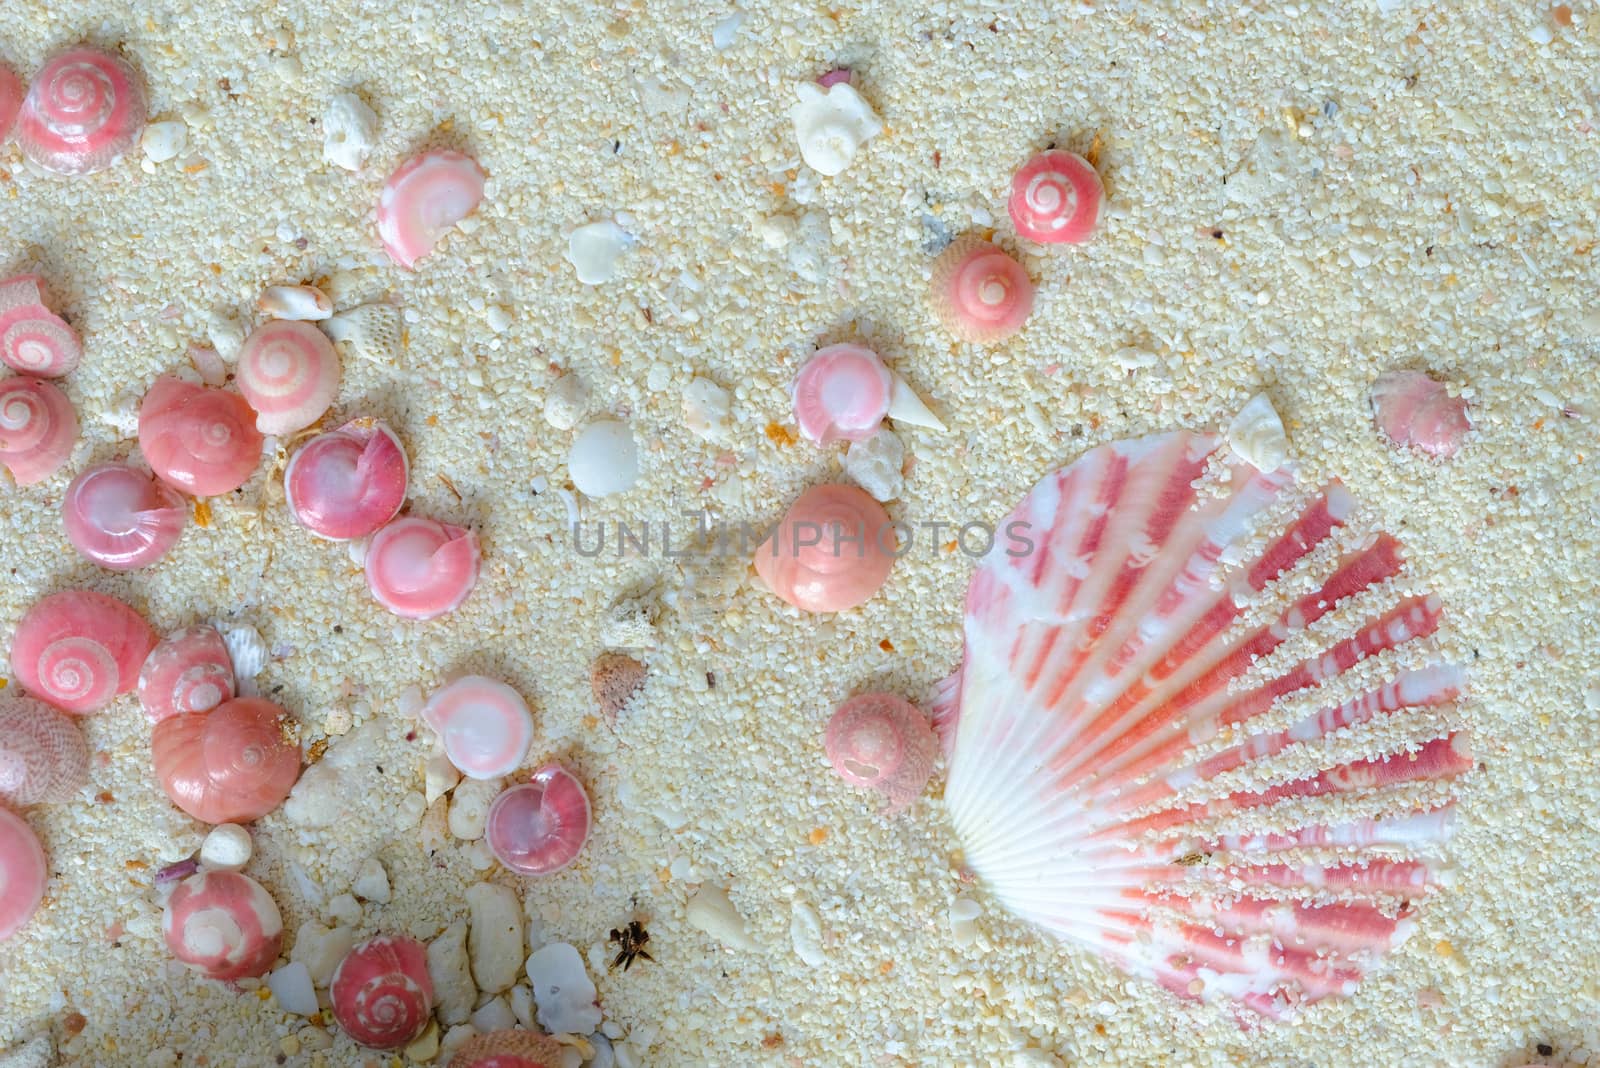 shells of pink button snails (Umbonium vestiarum) and scallop (Amusium pleuronectes) on white sand